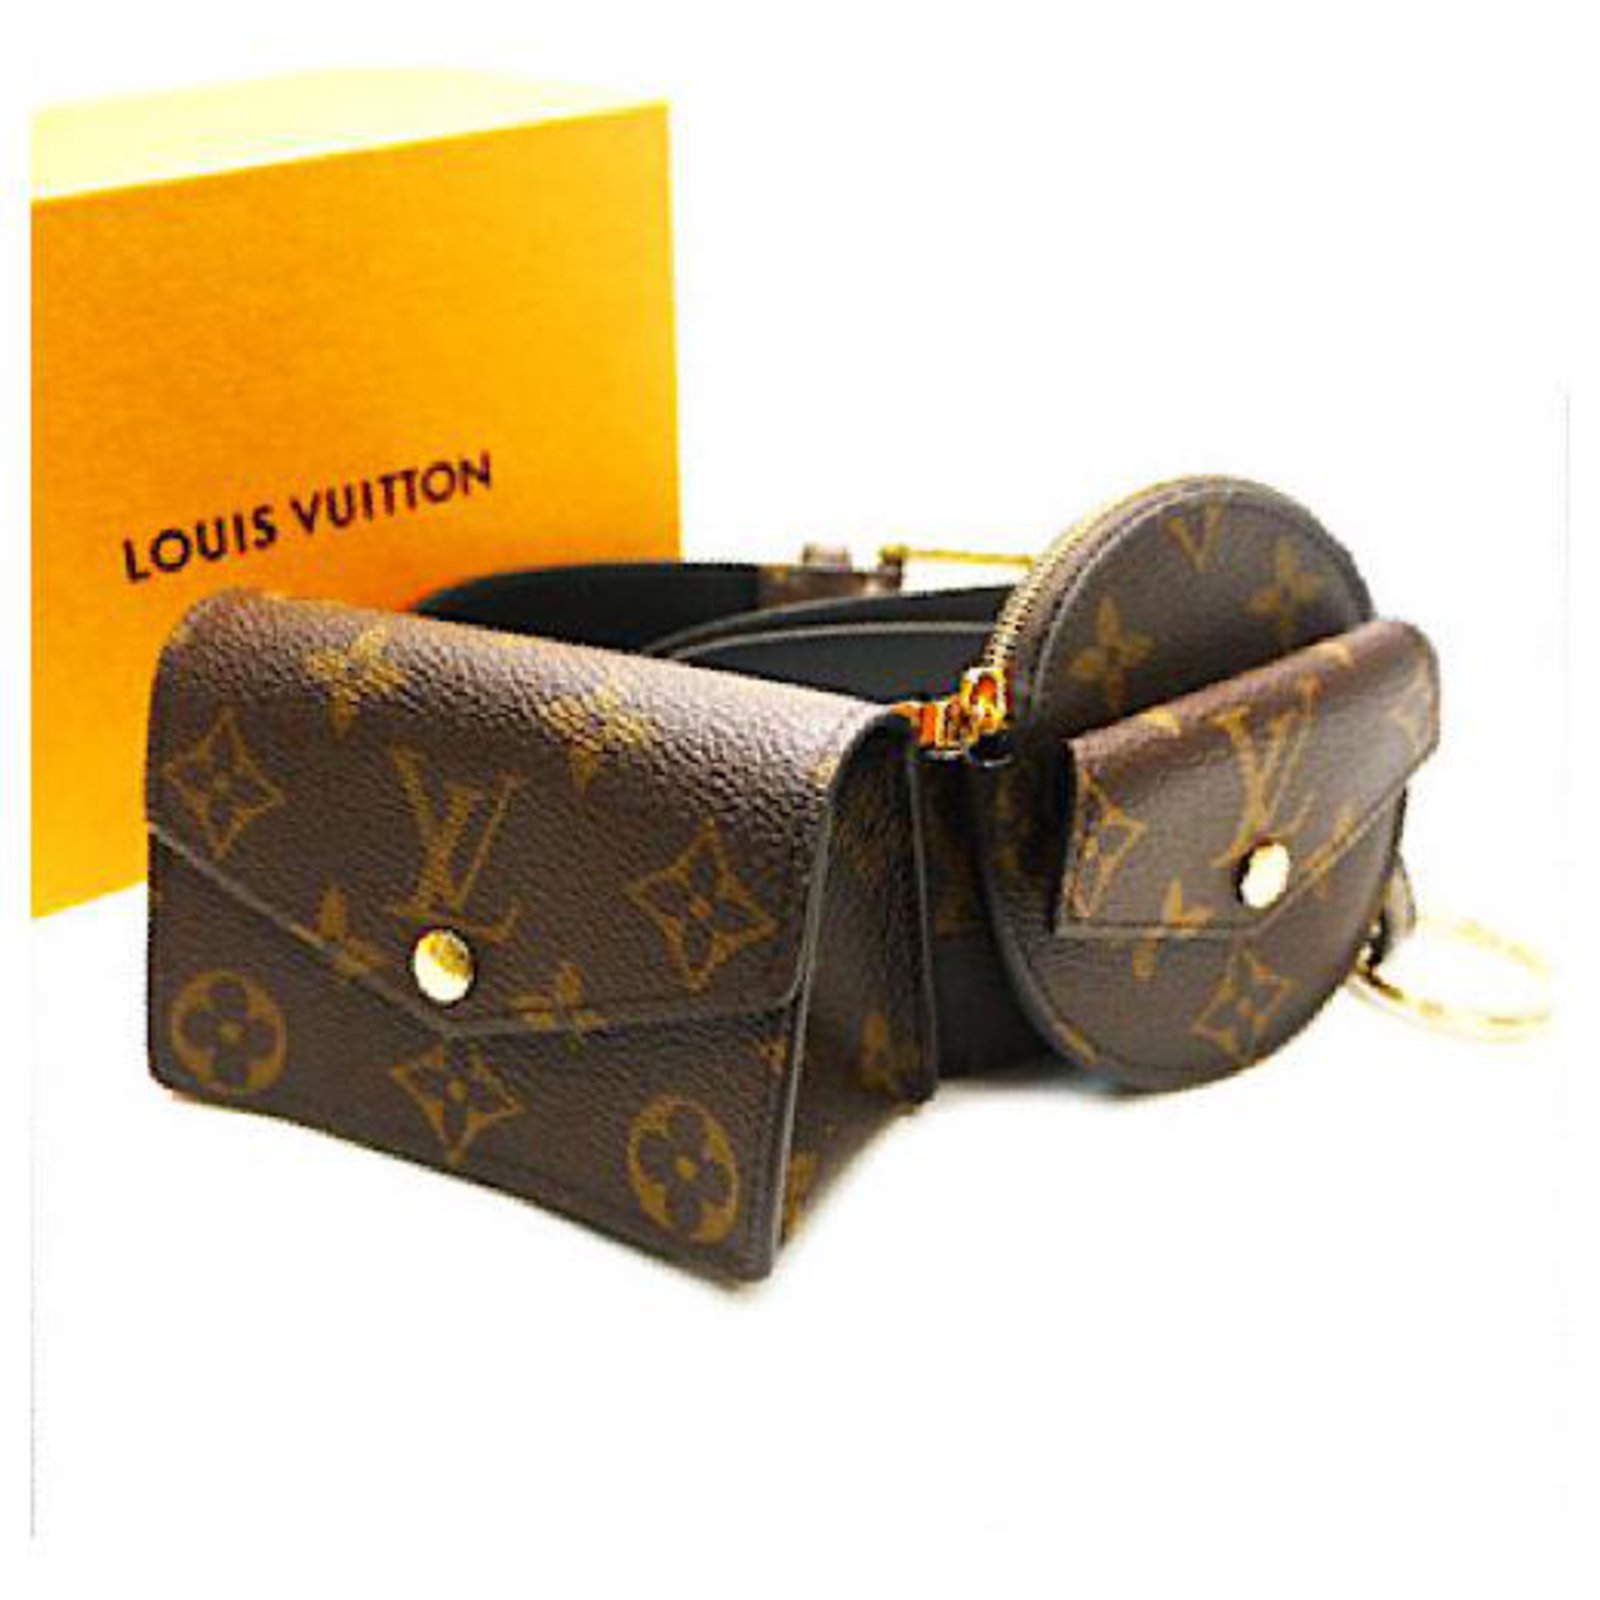 Louis Vuitton Brand new 2020 Daily Multi Pocket 30mm Belt Size 80